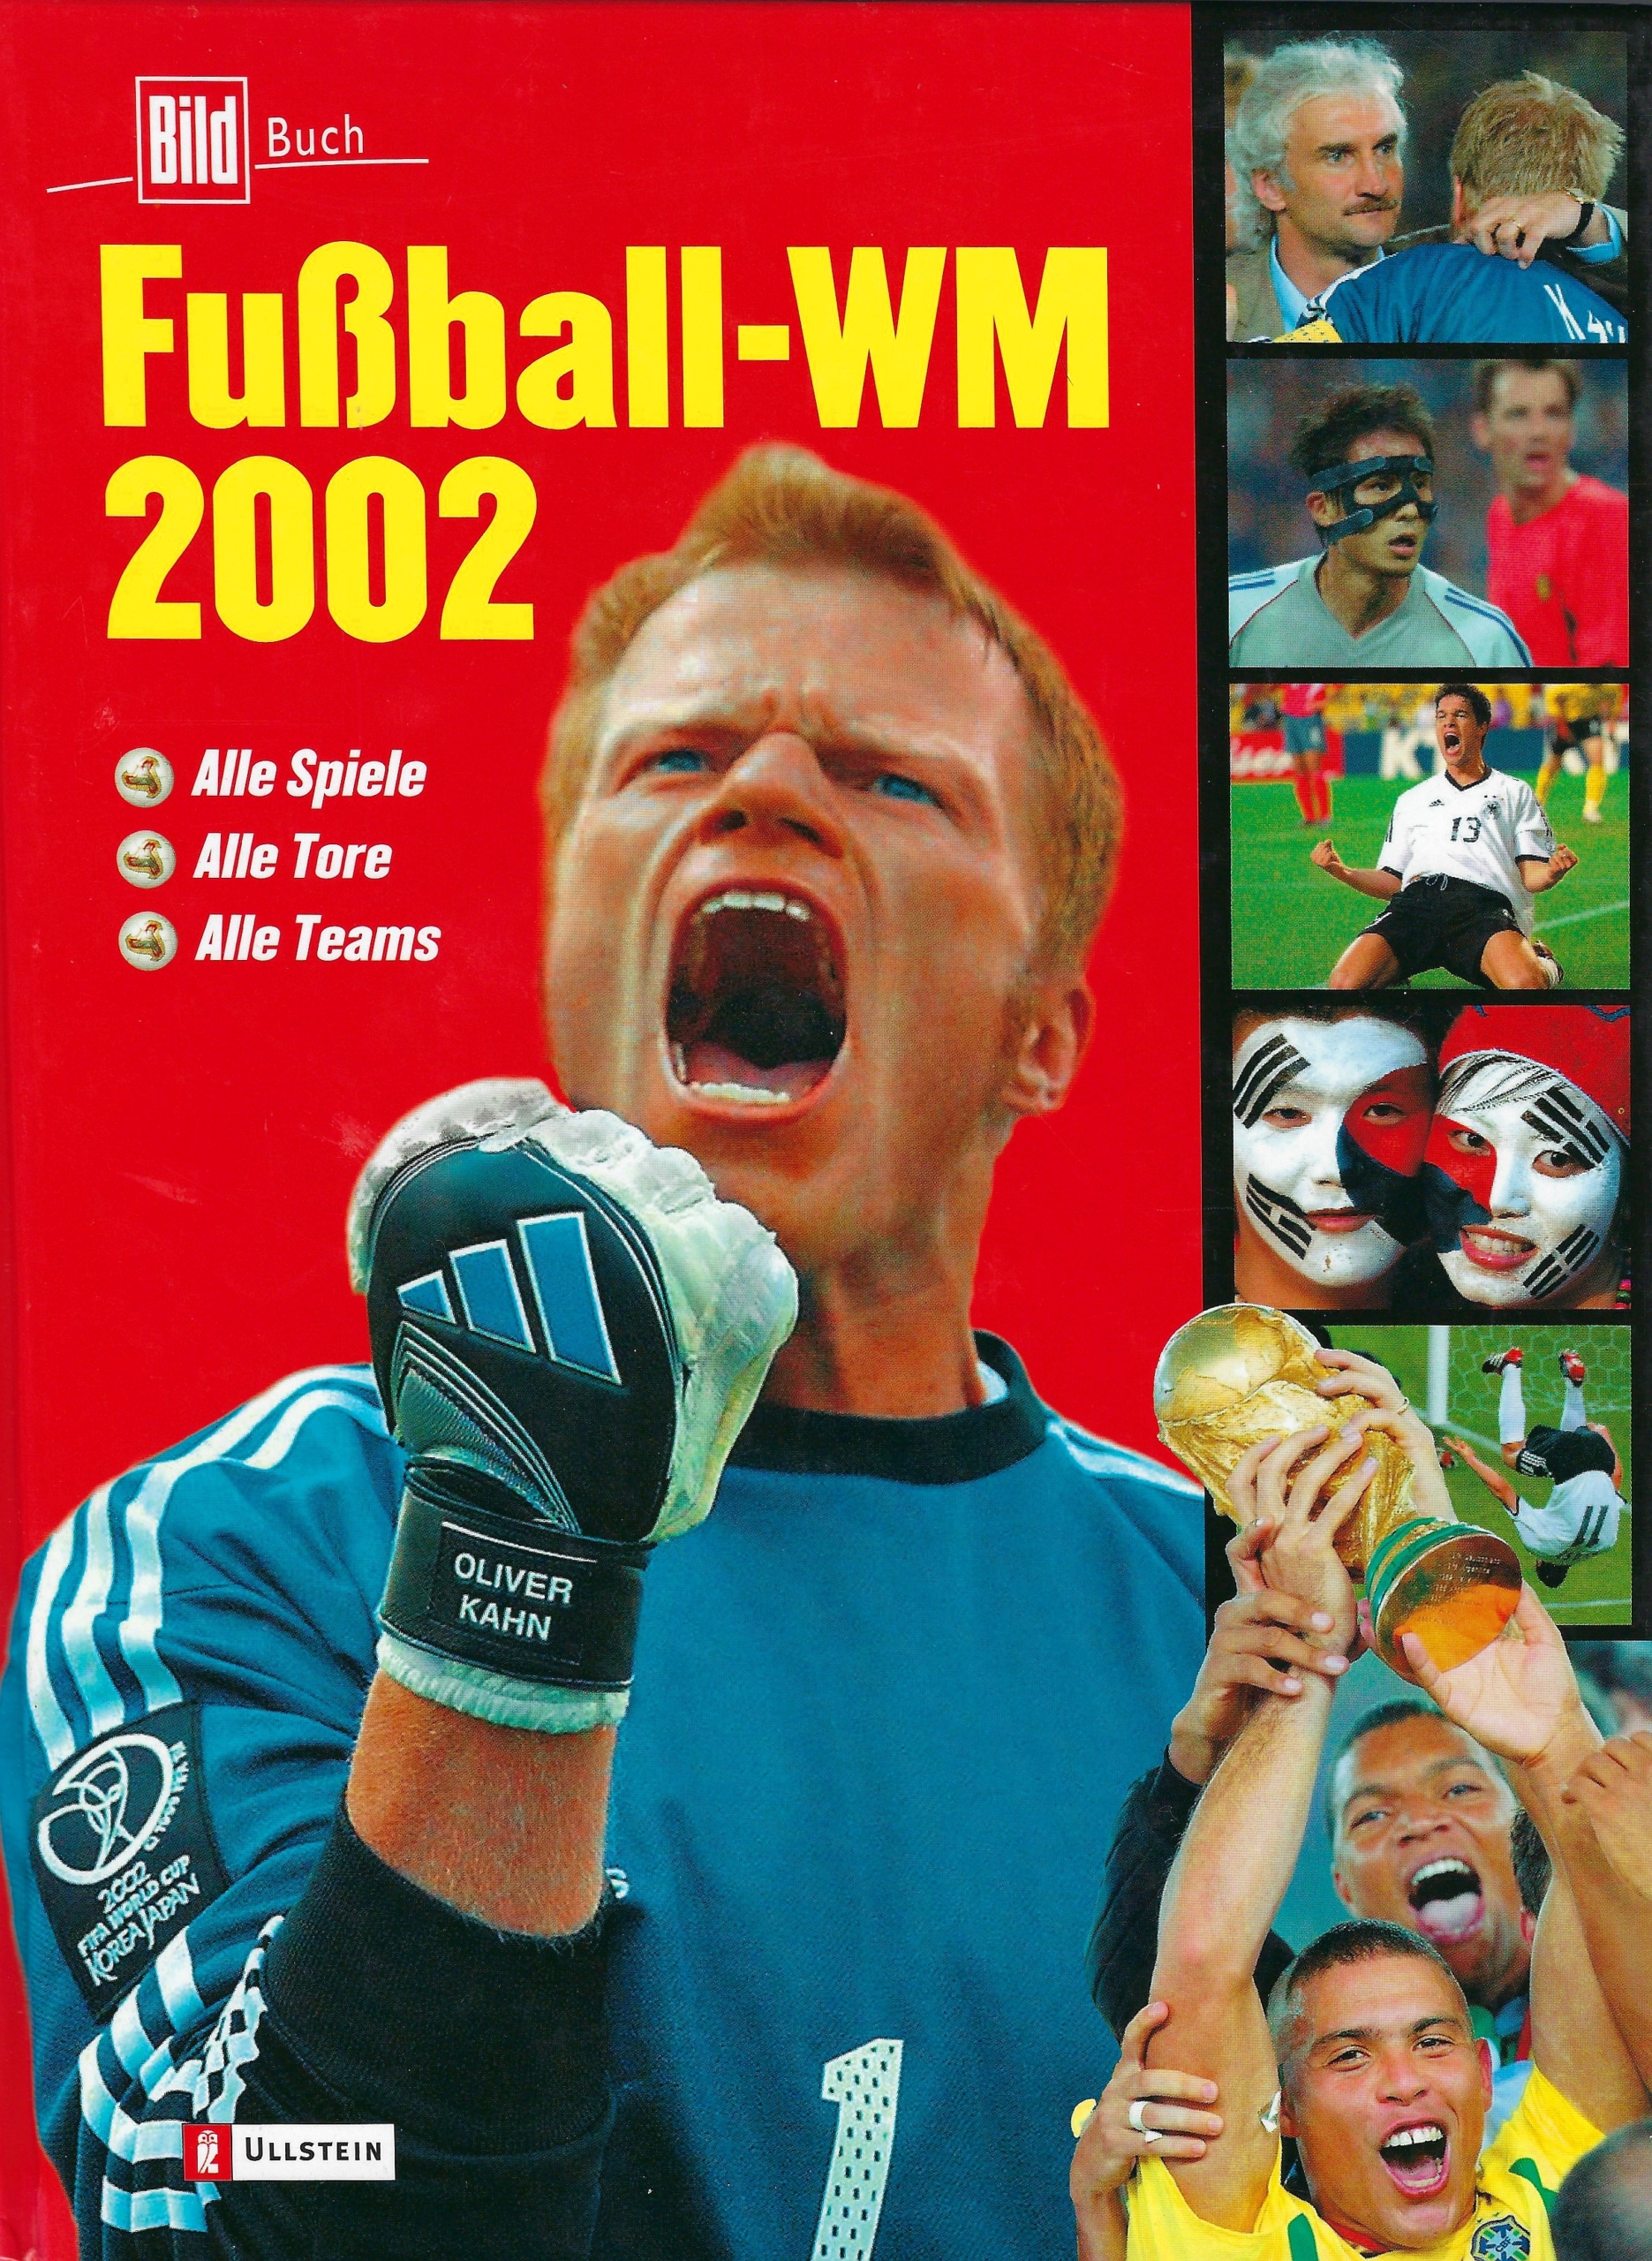  - Fuball-WM 2002 -Alle Spiele, alle Tore, alle Teams